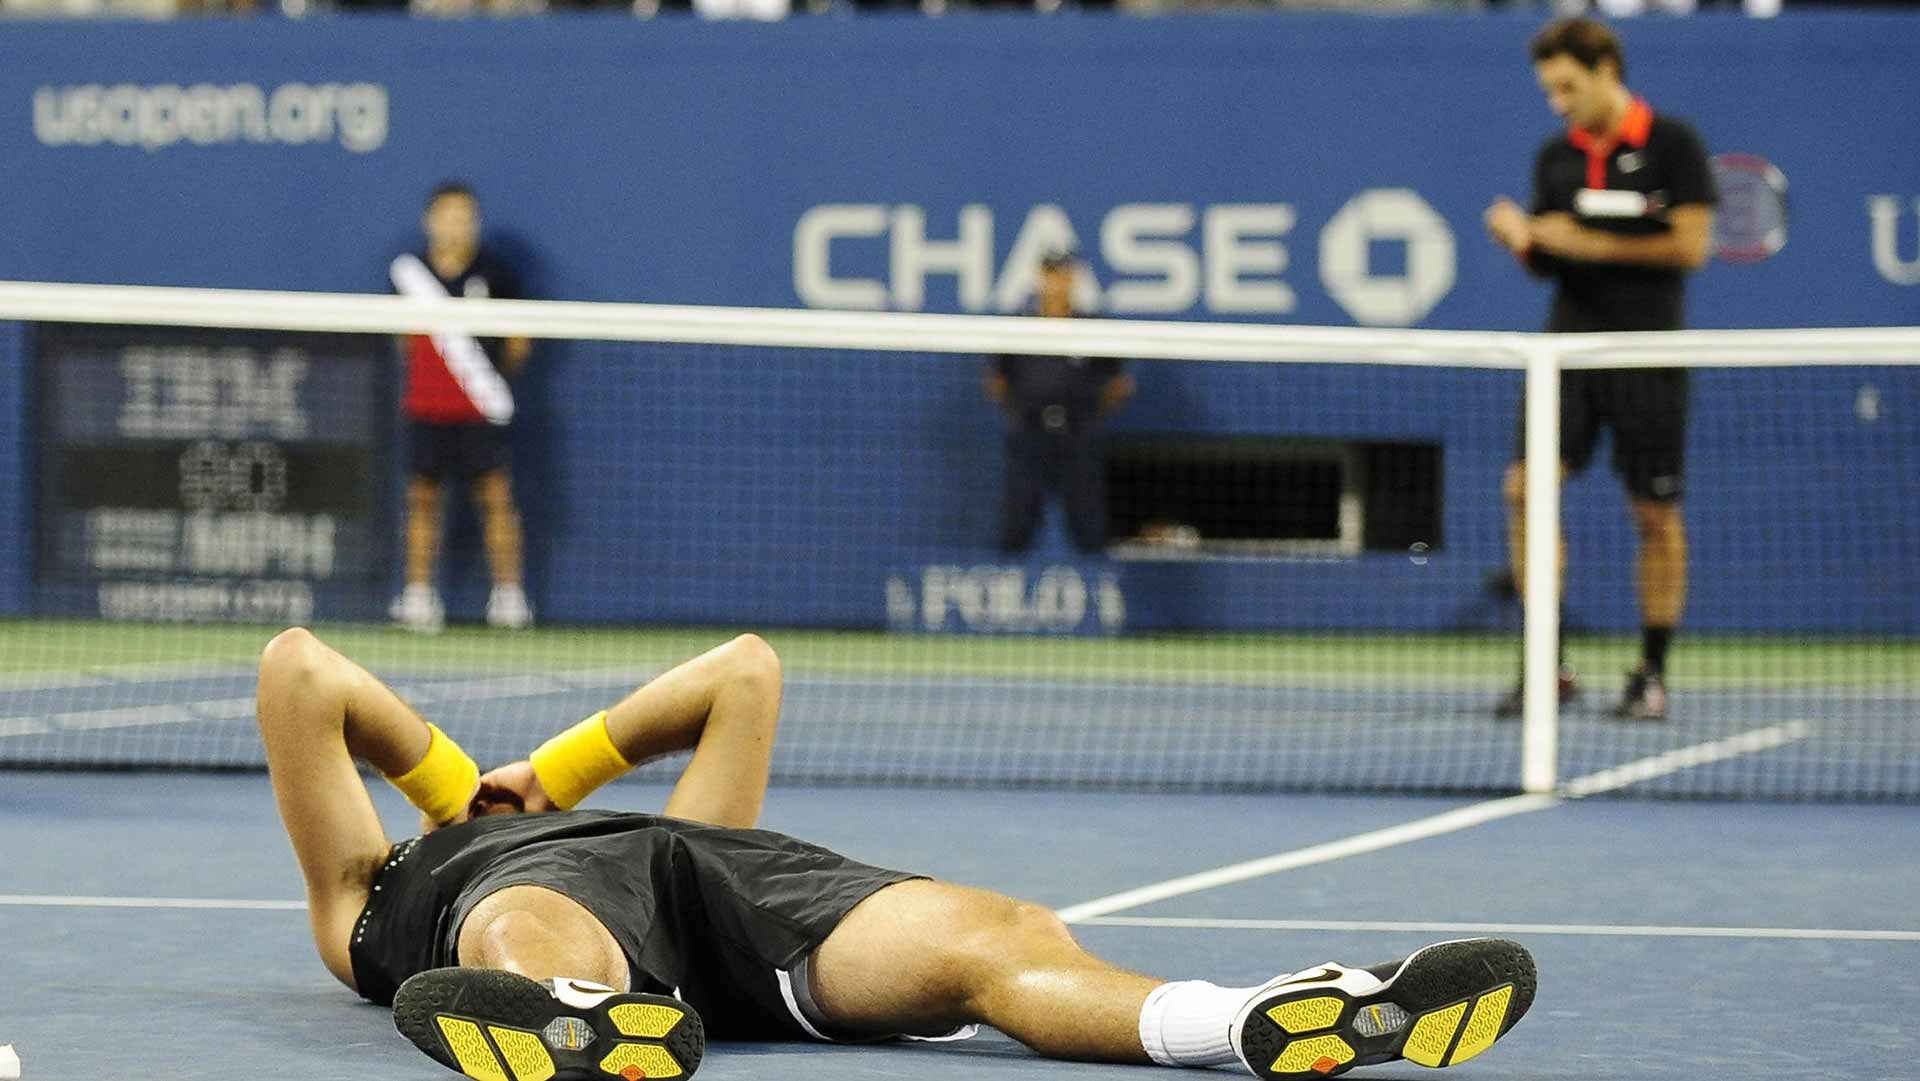 Juan Martin del Potro celebrates victory over Roger Federer in the 2009 US Open final.